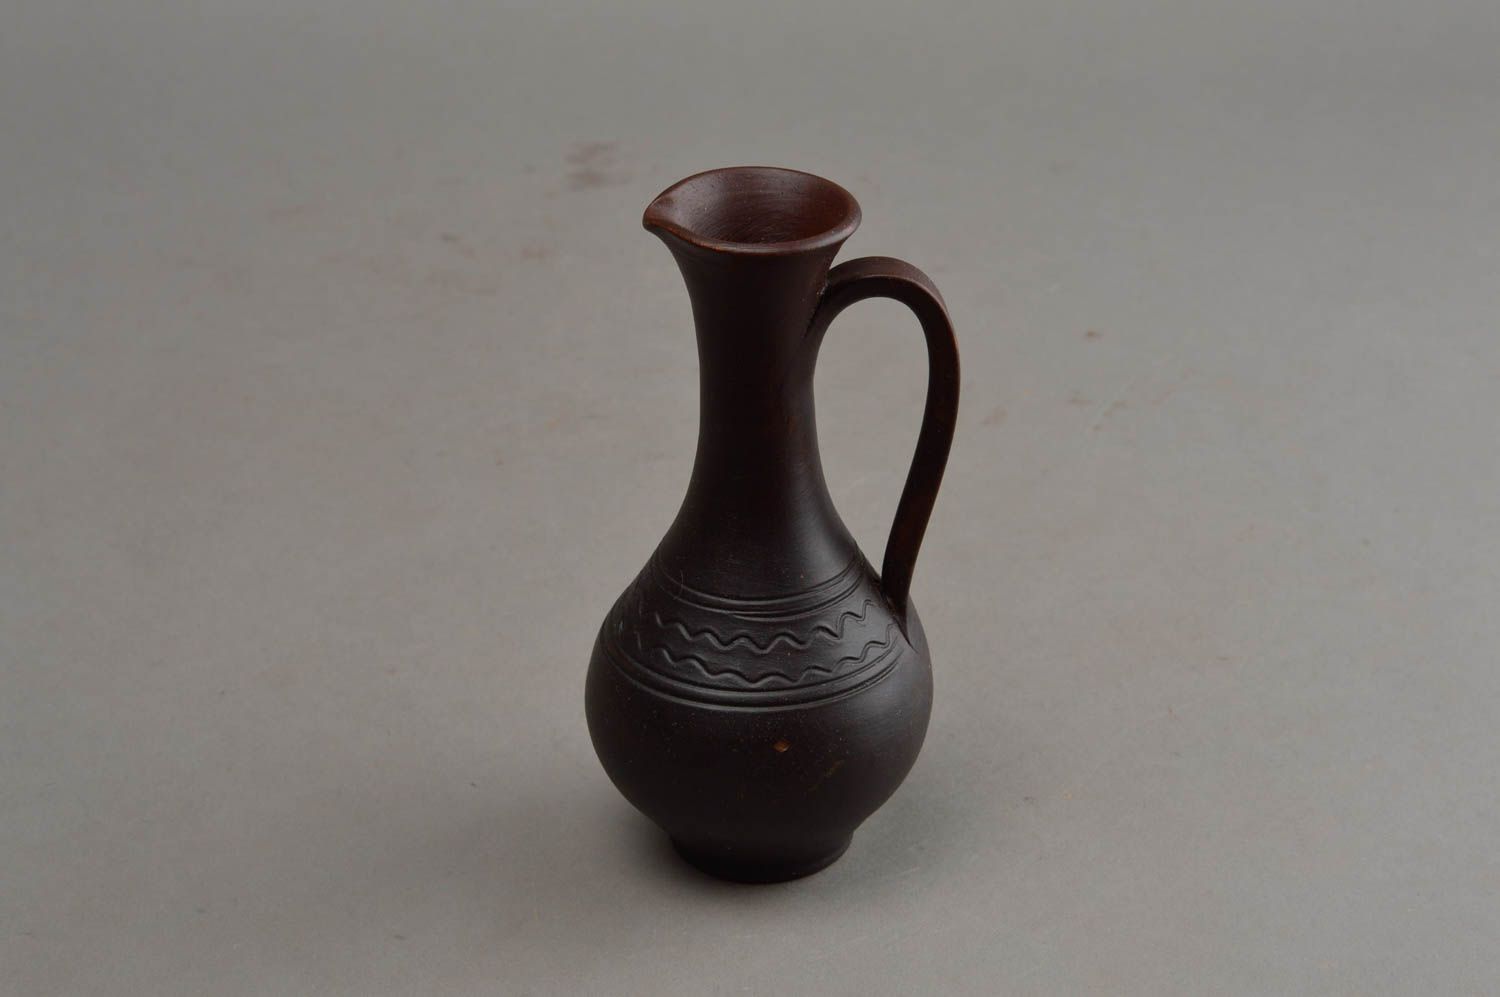 10 oz ceramic classic style handmade wine carafe 6 inches, 0,37 lb photo 3